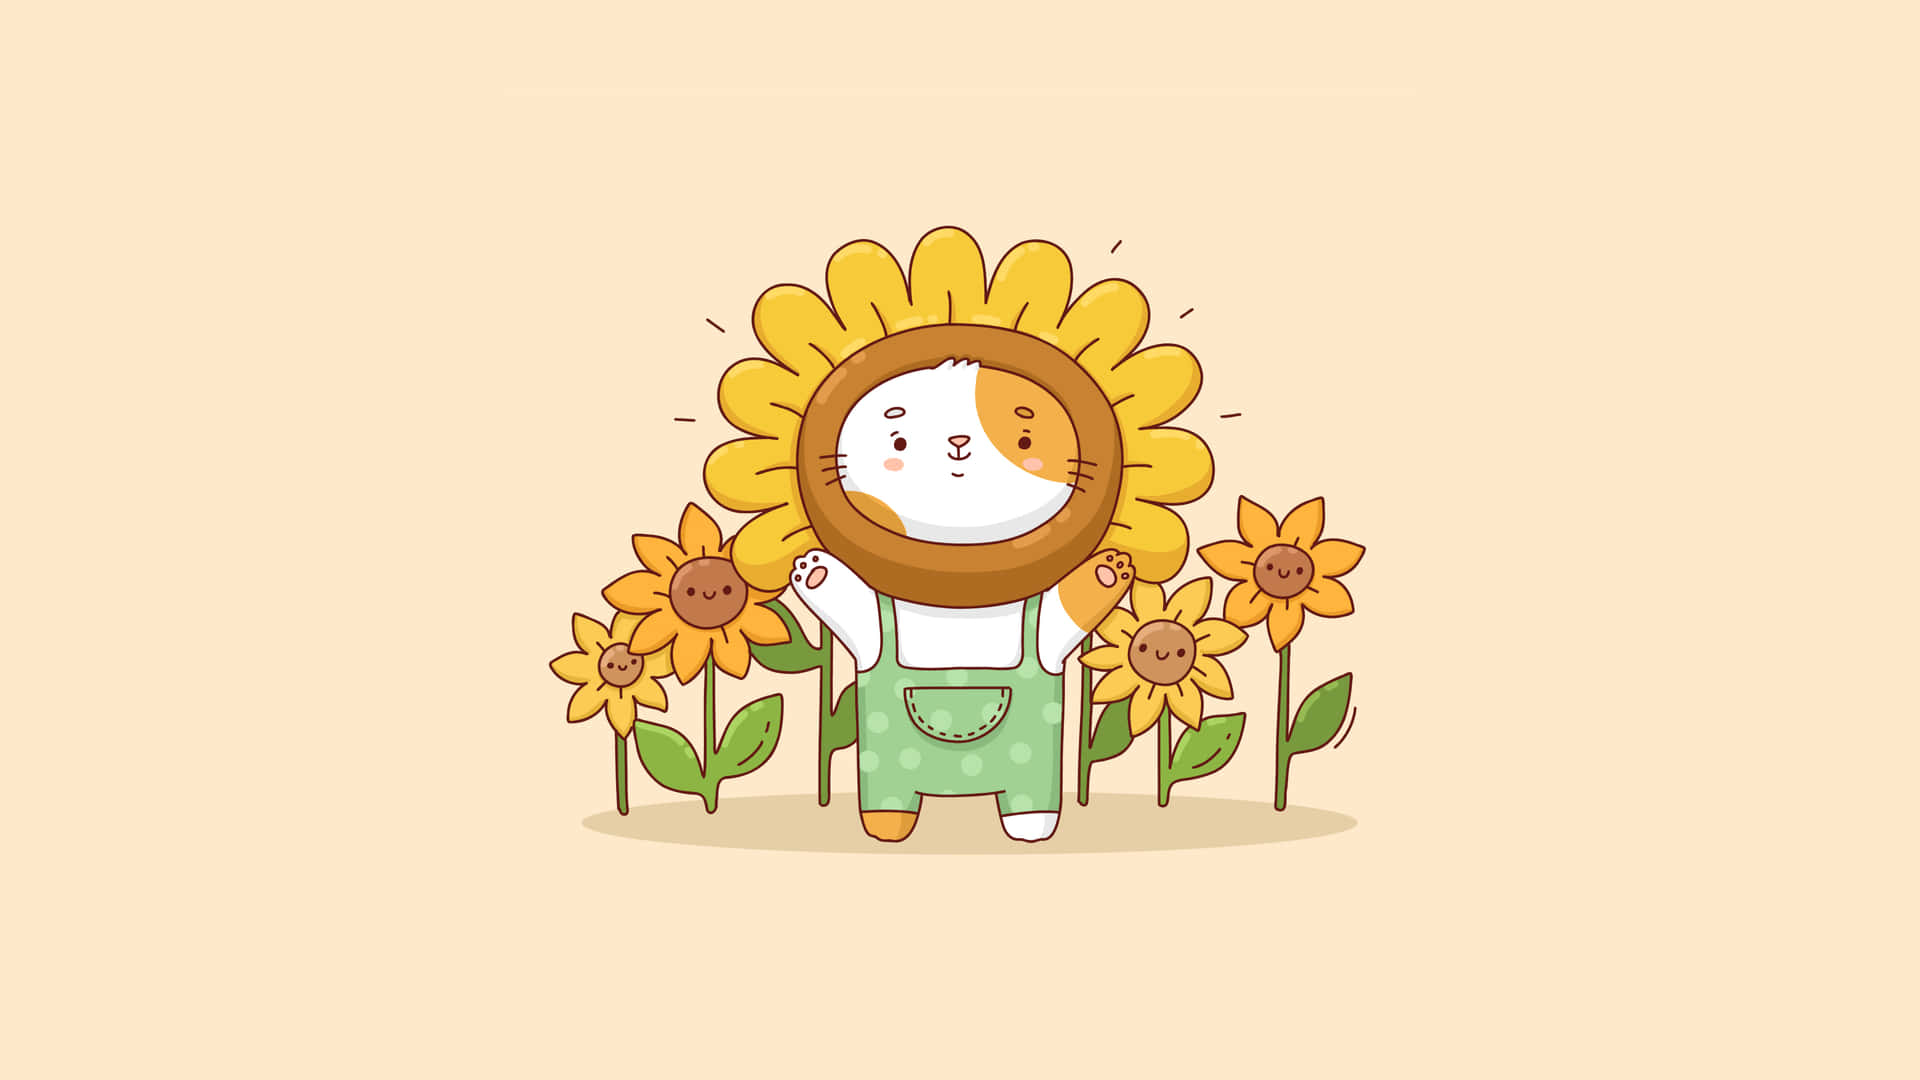 A Cartoon Cat With A Sunflower On His Head